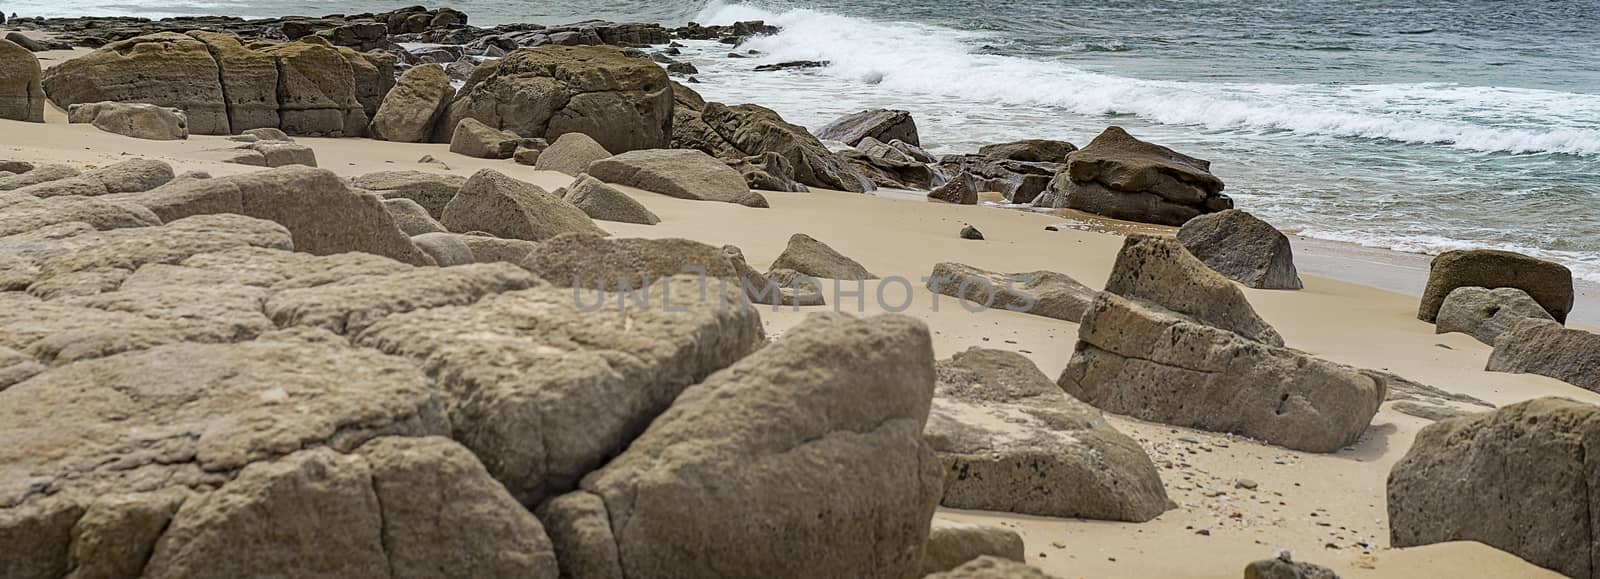 Australian panoramic rocky seafront beach view by sherj